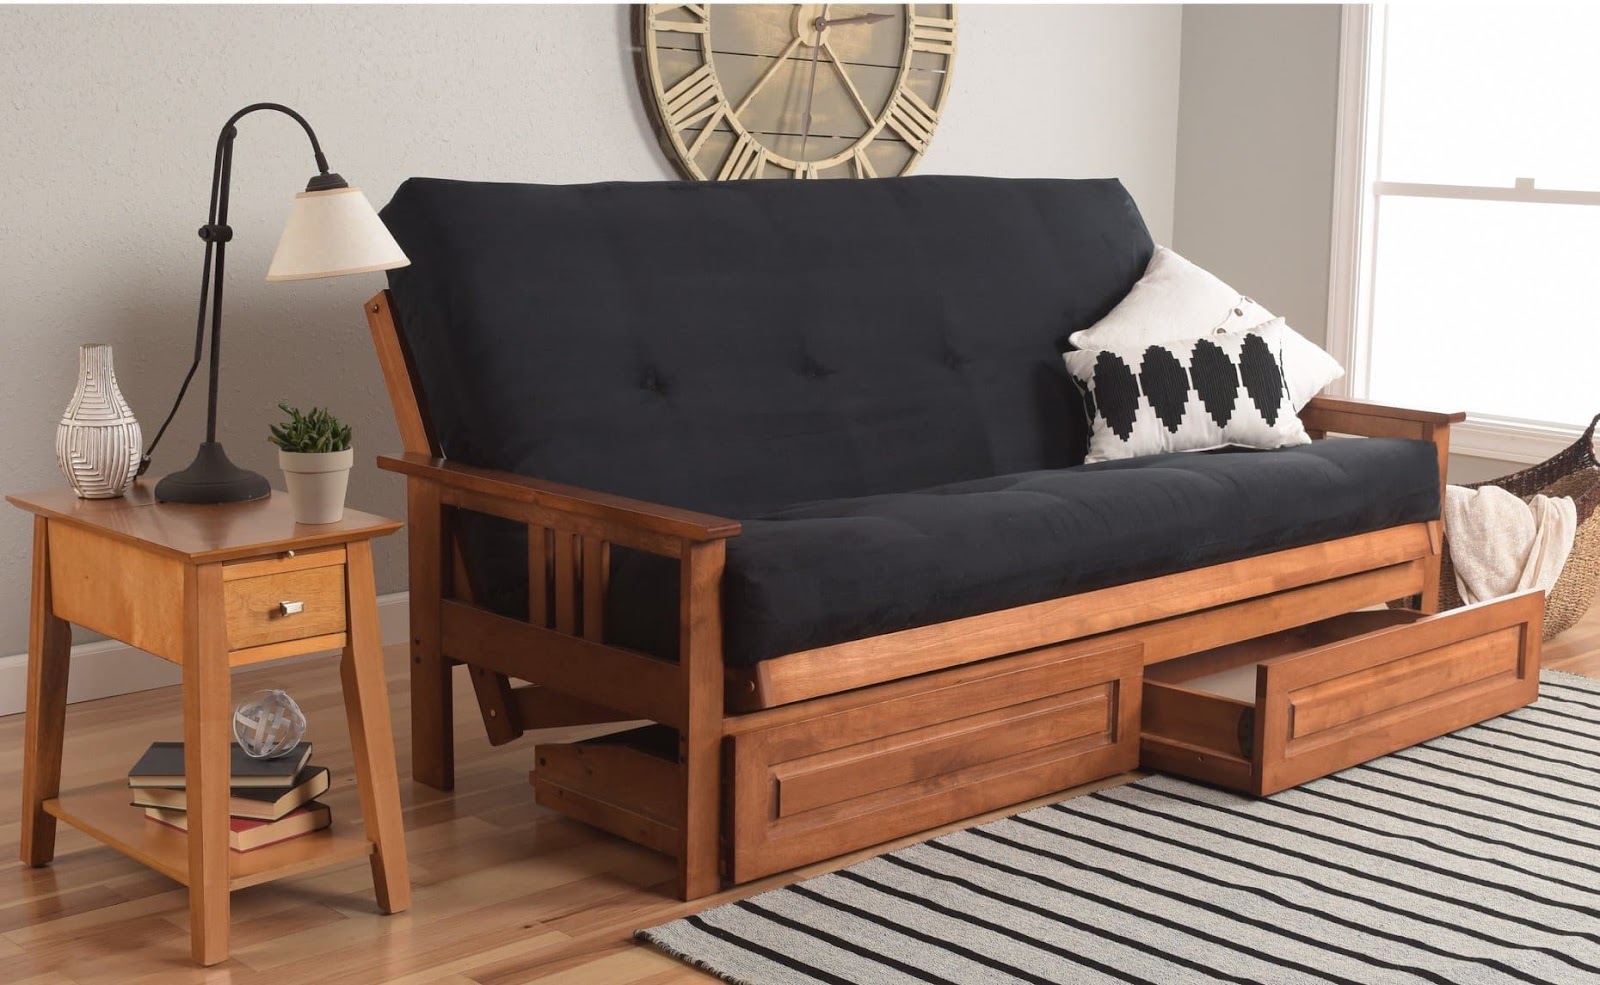 ghế sofa giường gỗ tphcm